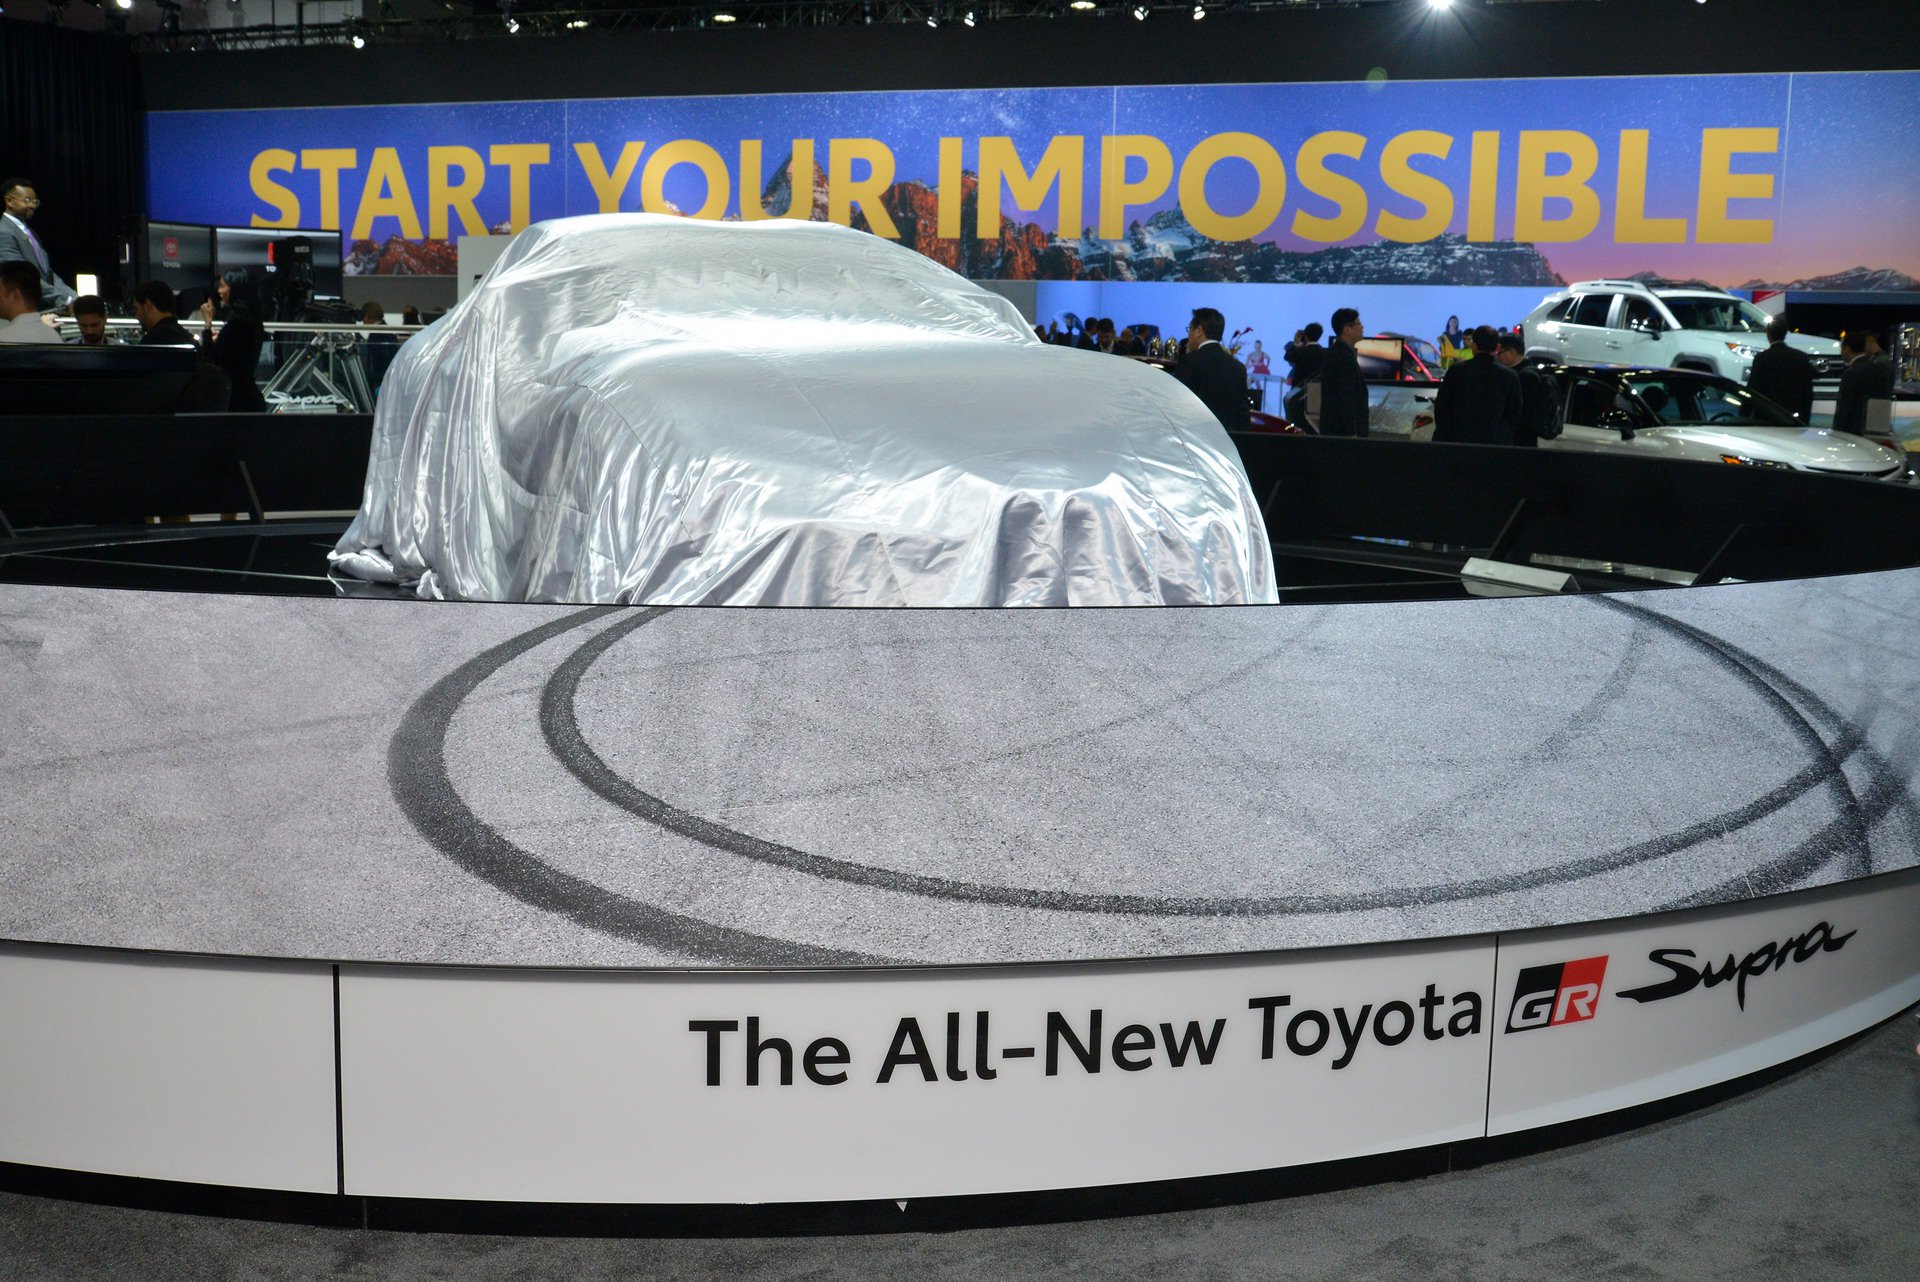 2020 Toyota GR Supra resim galerisi (15.01.2018)